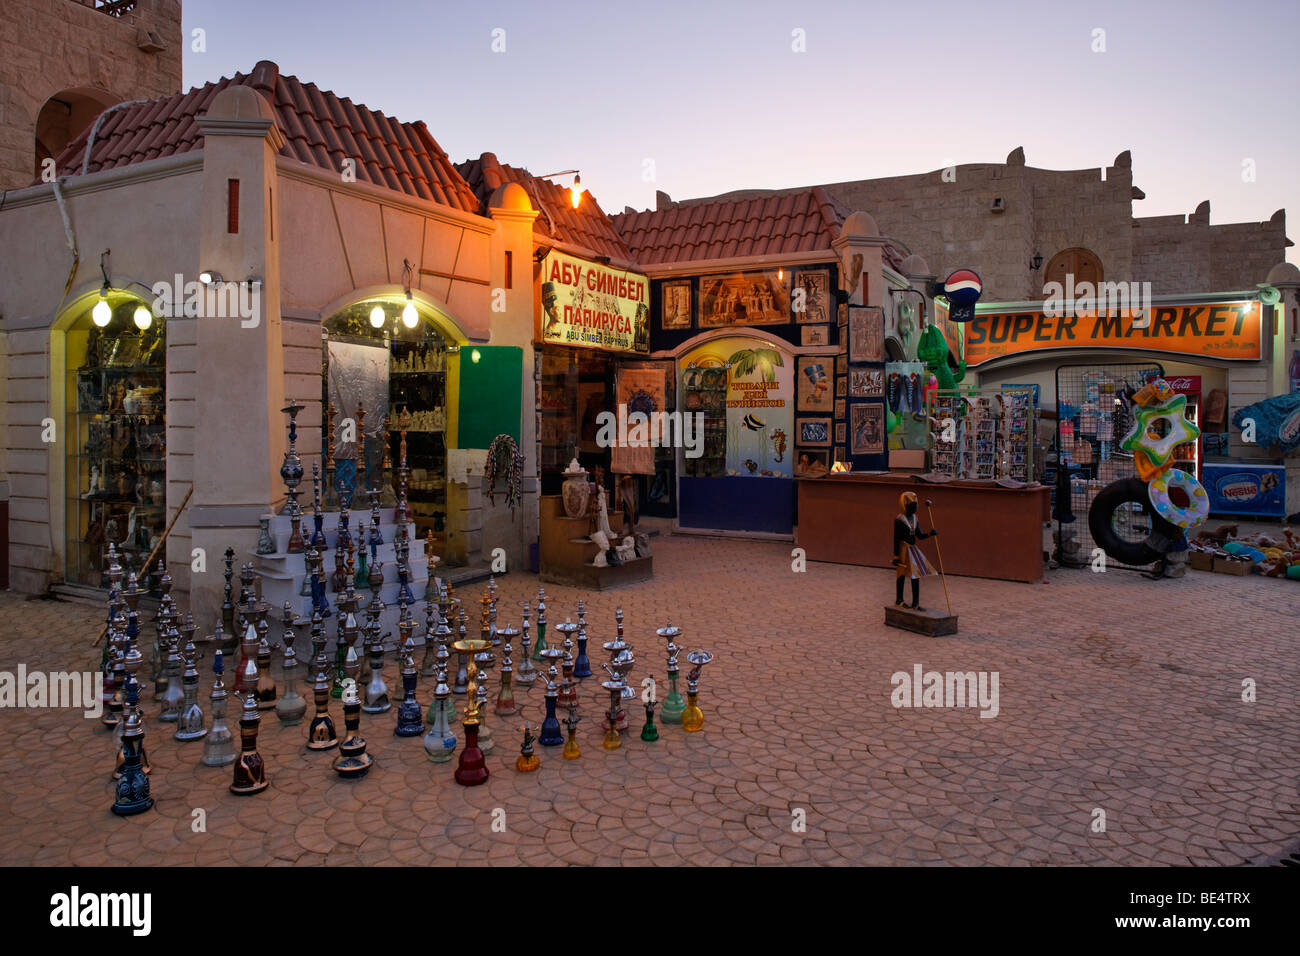 Souvenir-Shop, Wasserpfeifen, Shishas, beleuchtet, Abend, Yussuf Afifi Road, Hurghada, Ägypten, Rotes Meer, Afrika Stockfoto